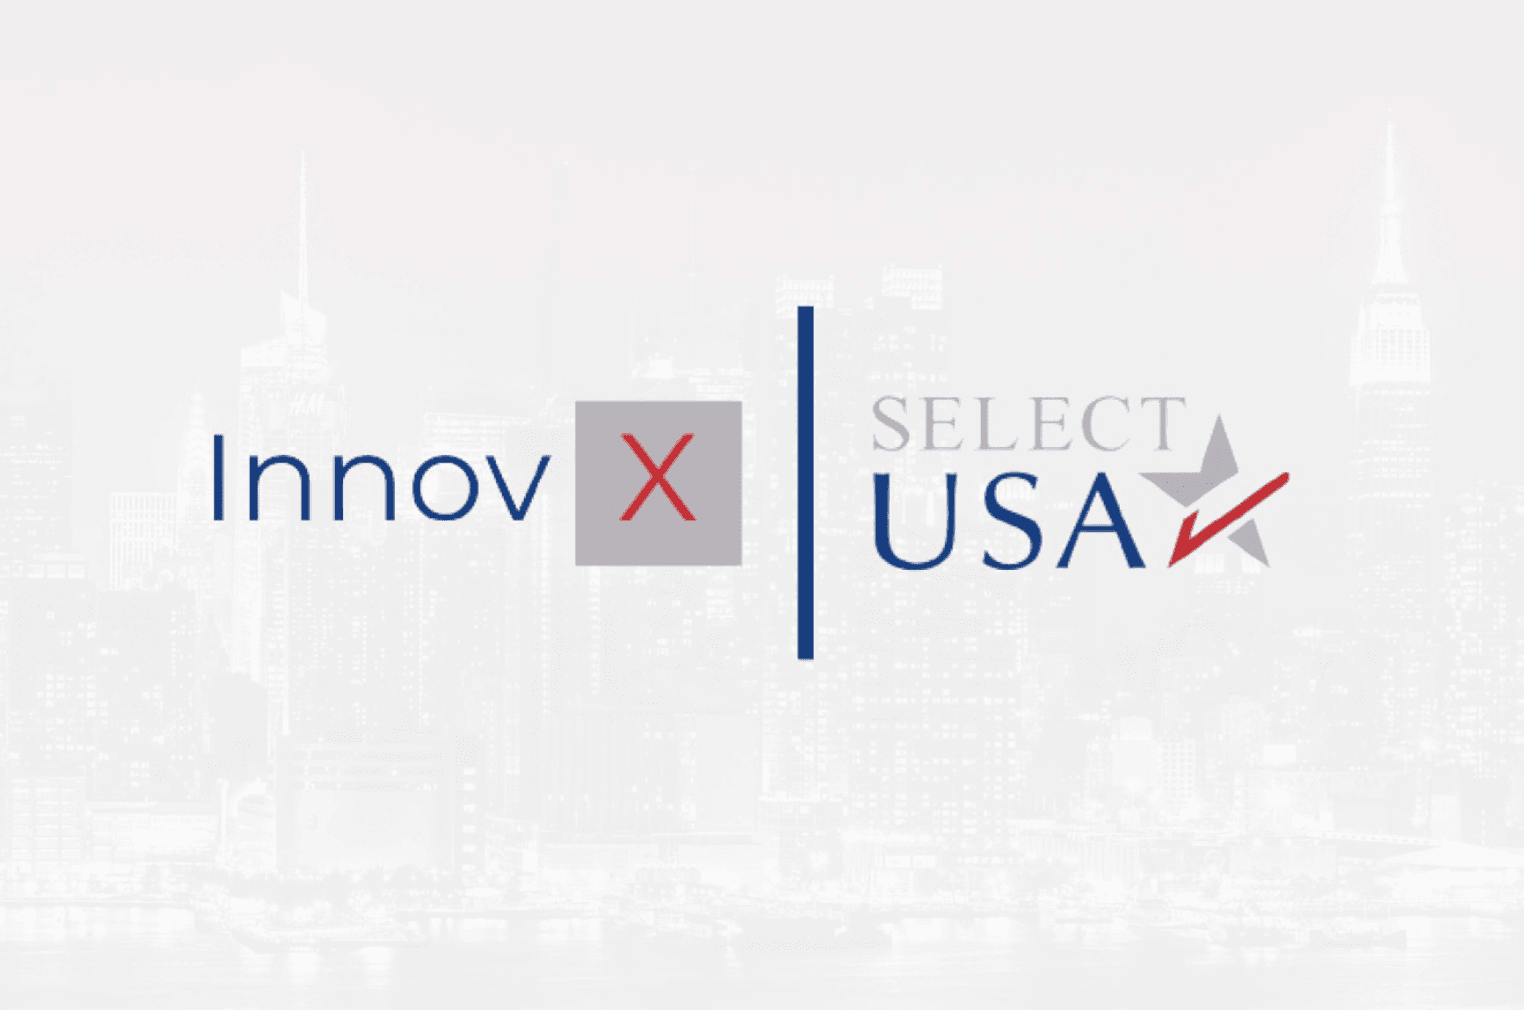 InnovX | Select USA Event Image